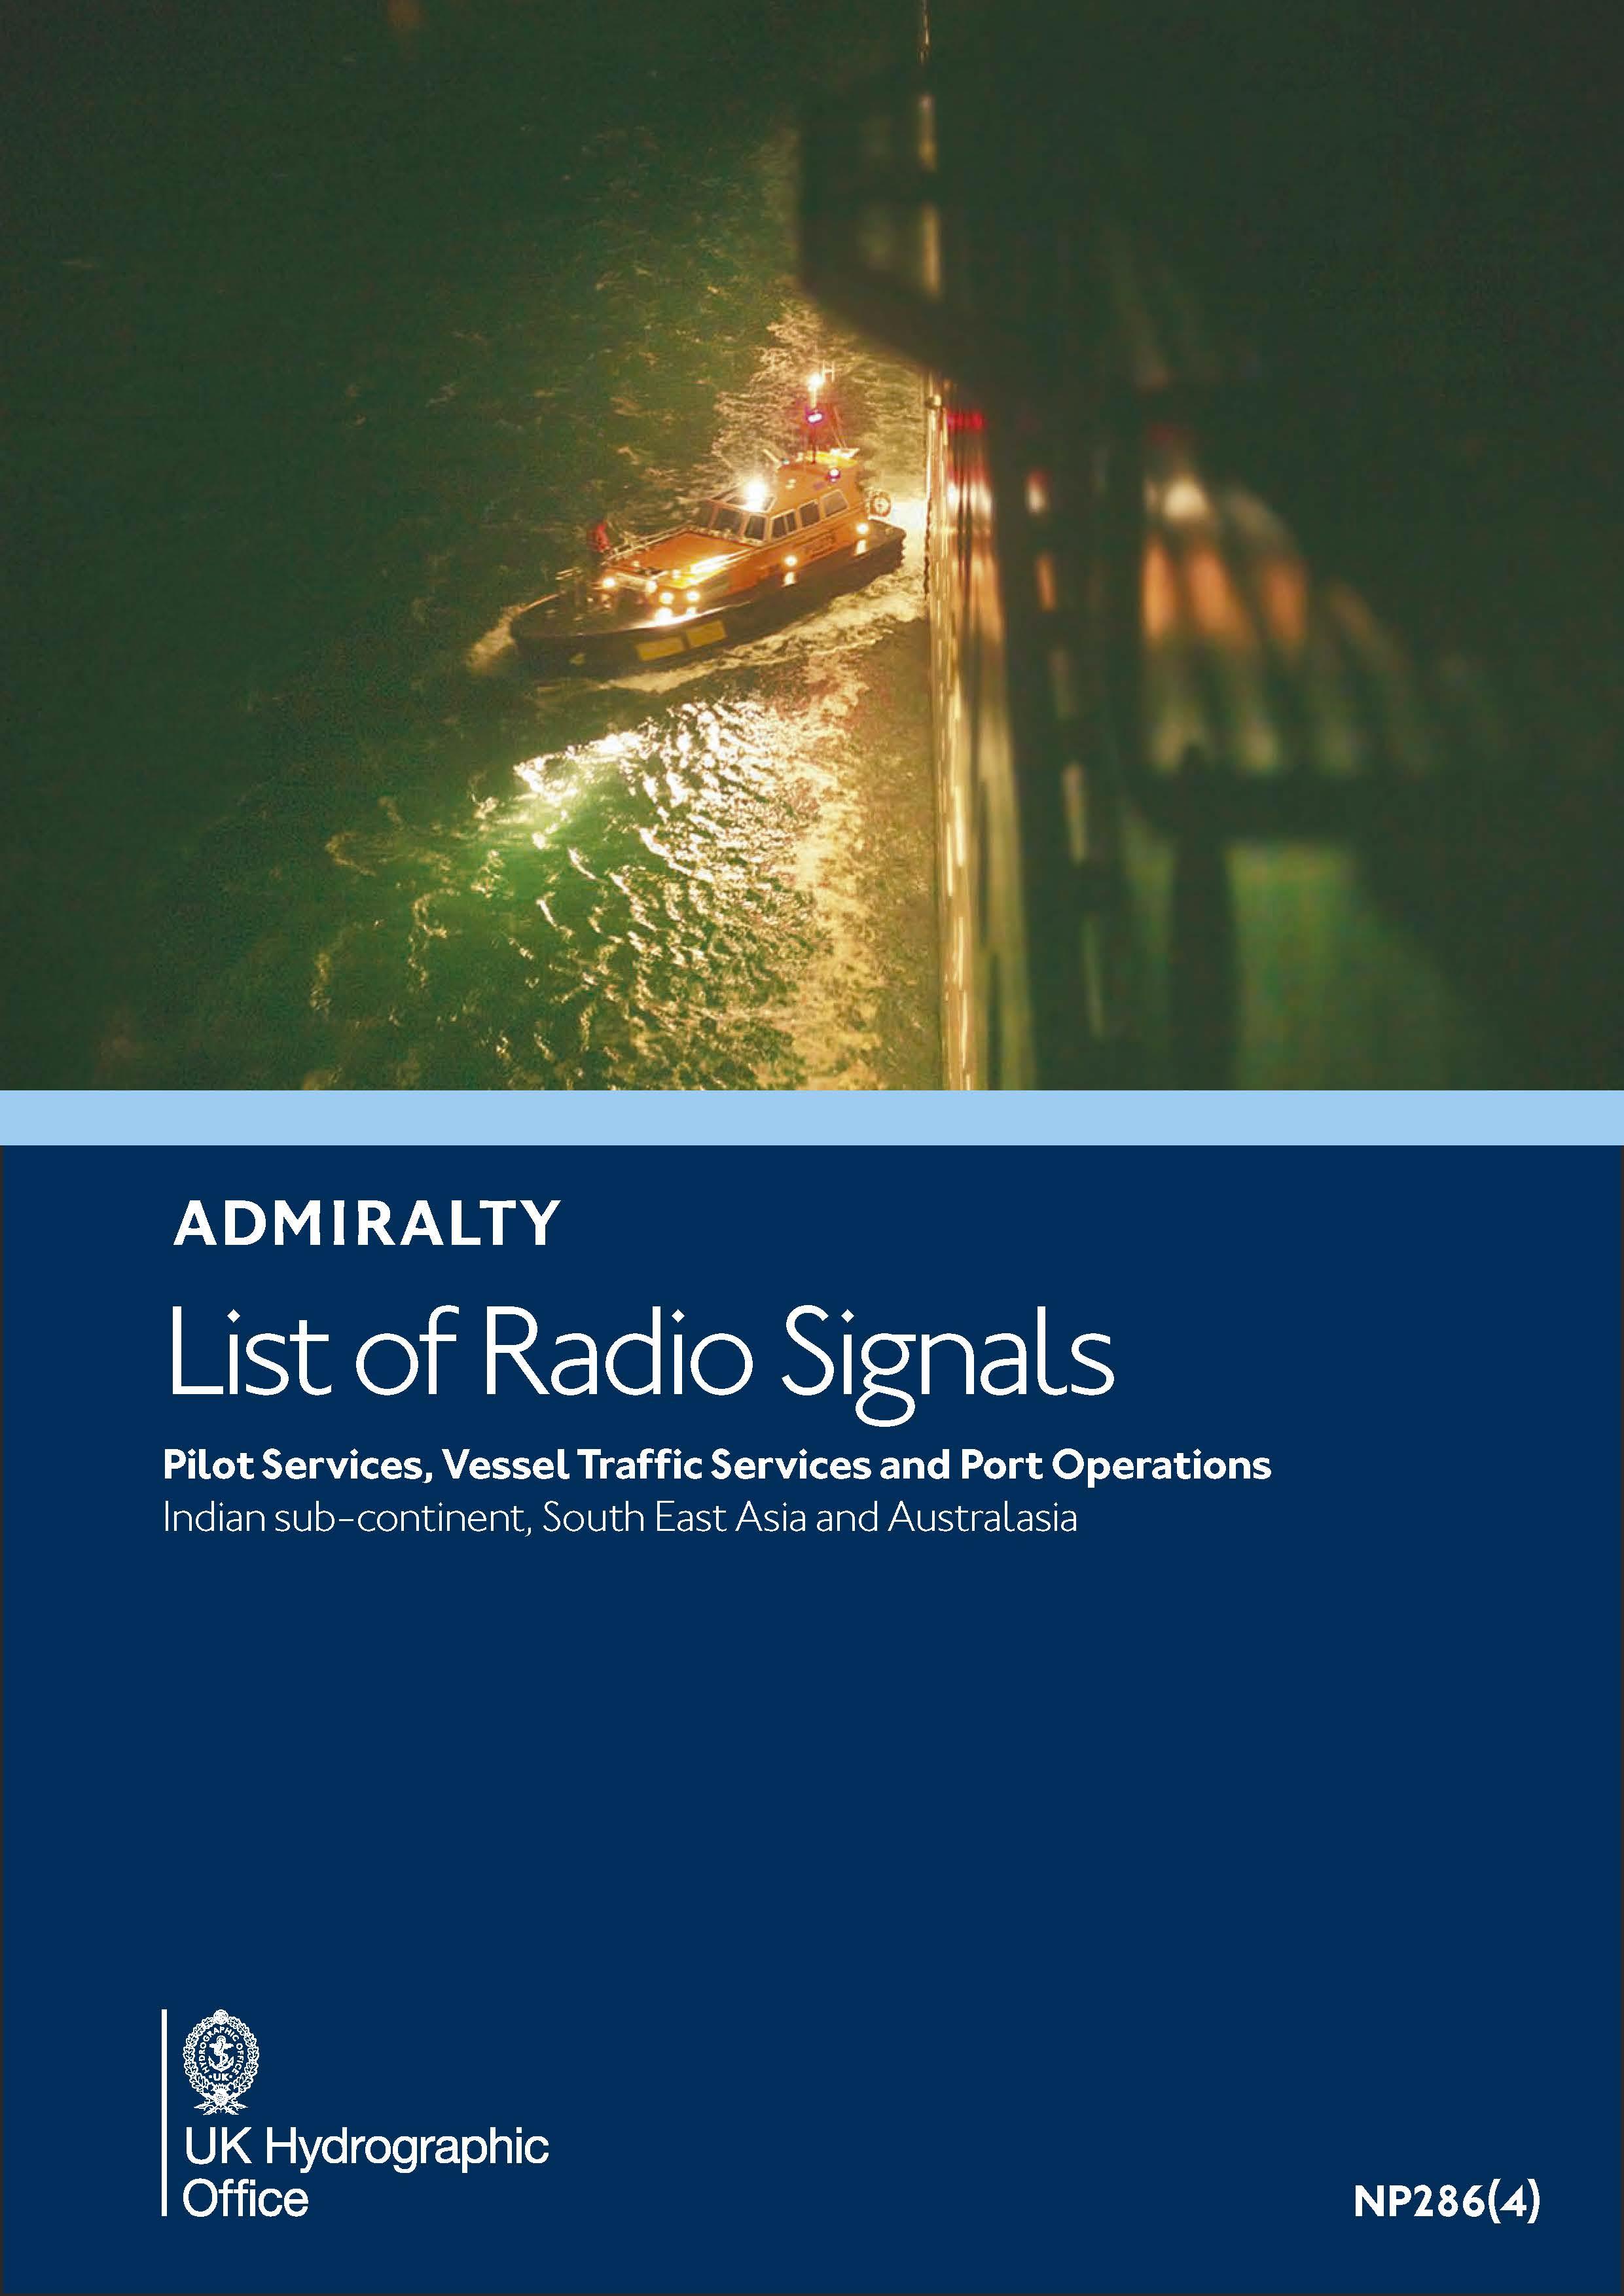 ADMIRALTY NP286(4) RadioSignals Pilot VTS Port - Australia South Pacific